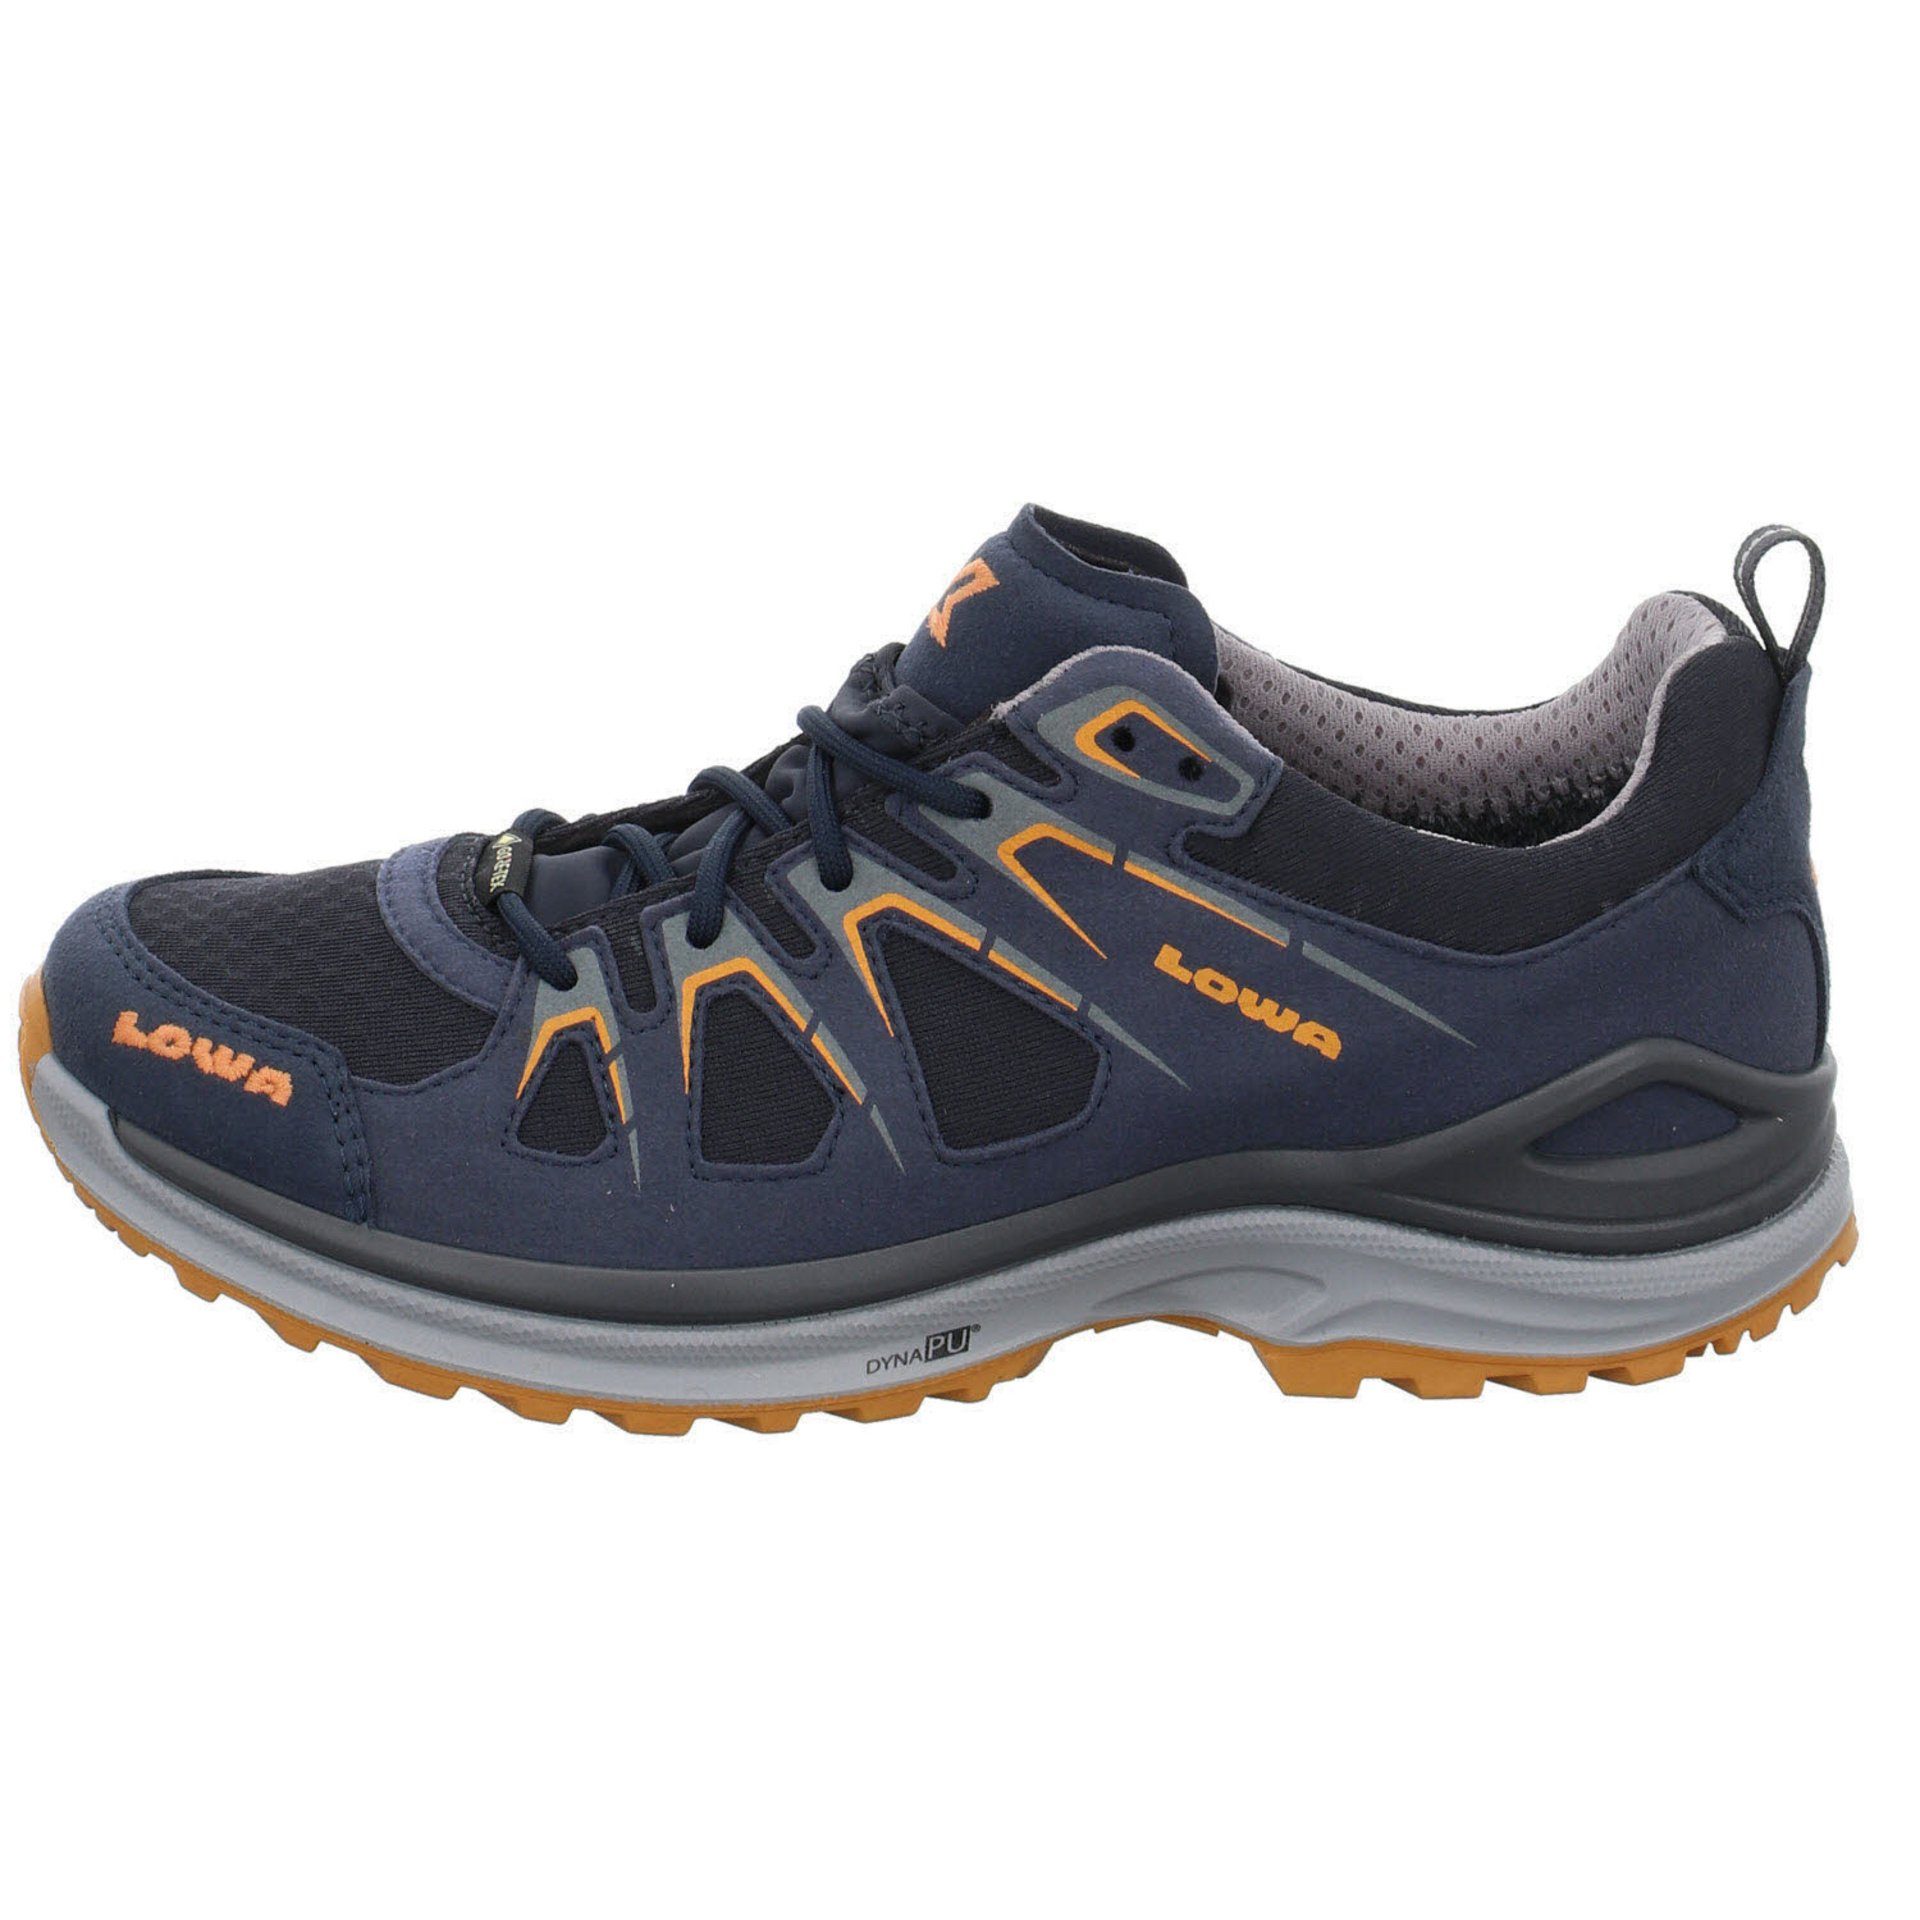 Damen Outdoor Outdoorschuh Lowa Synthetikkombination EVO Innox Outdoorschuh Schuhe Lo stahlblau/marine